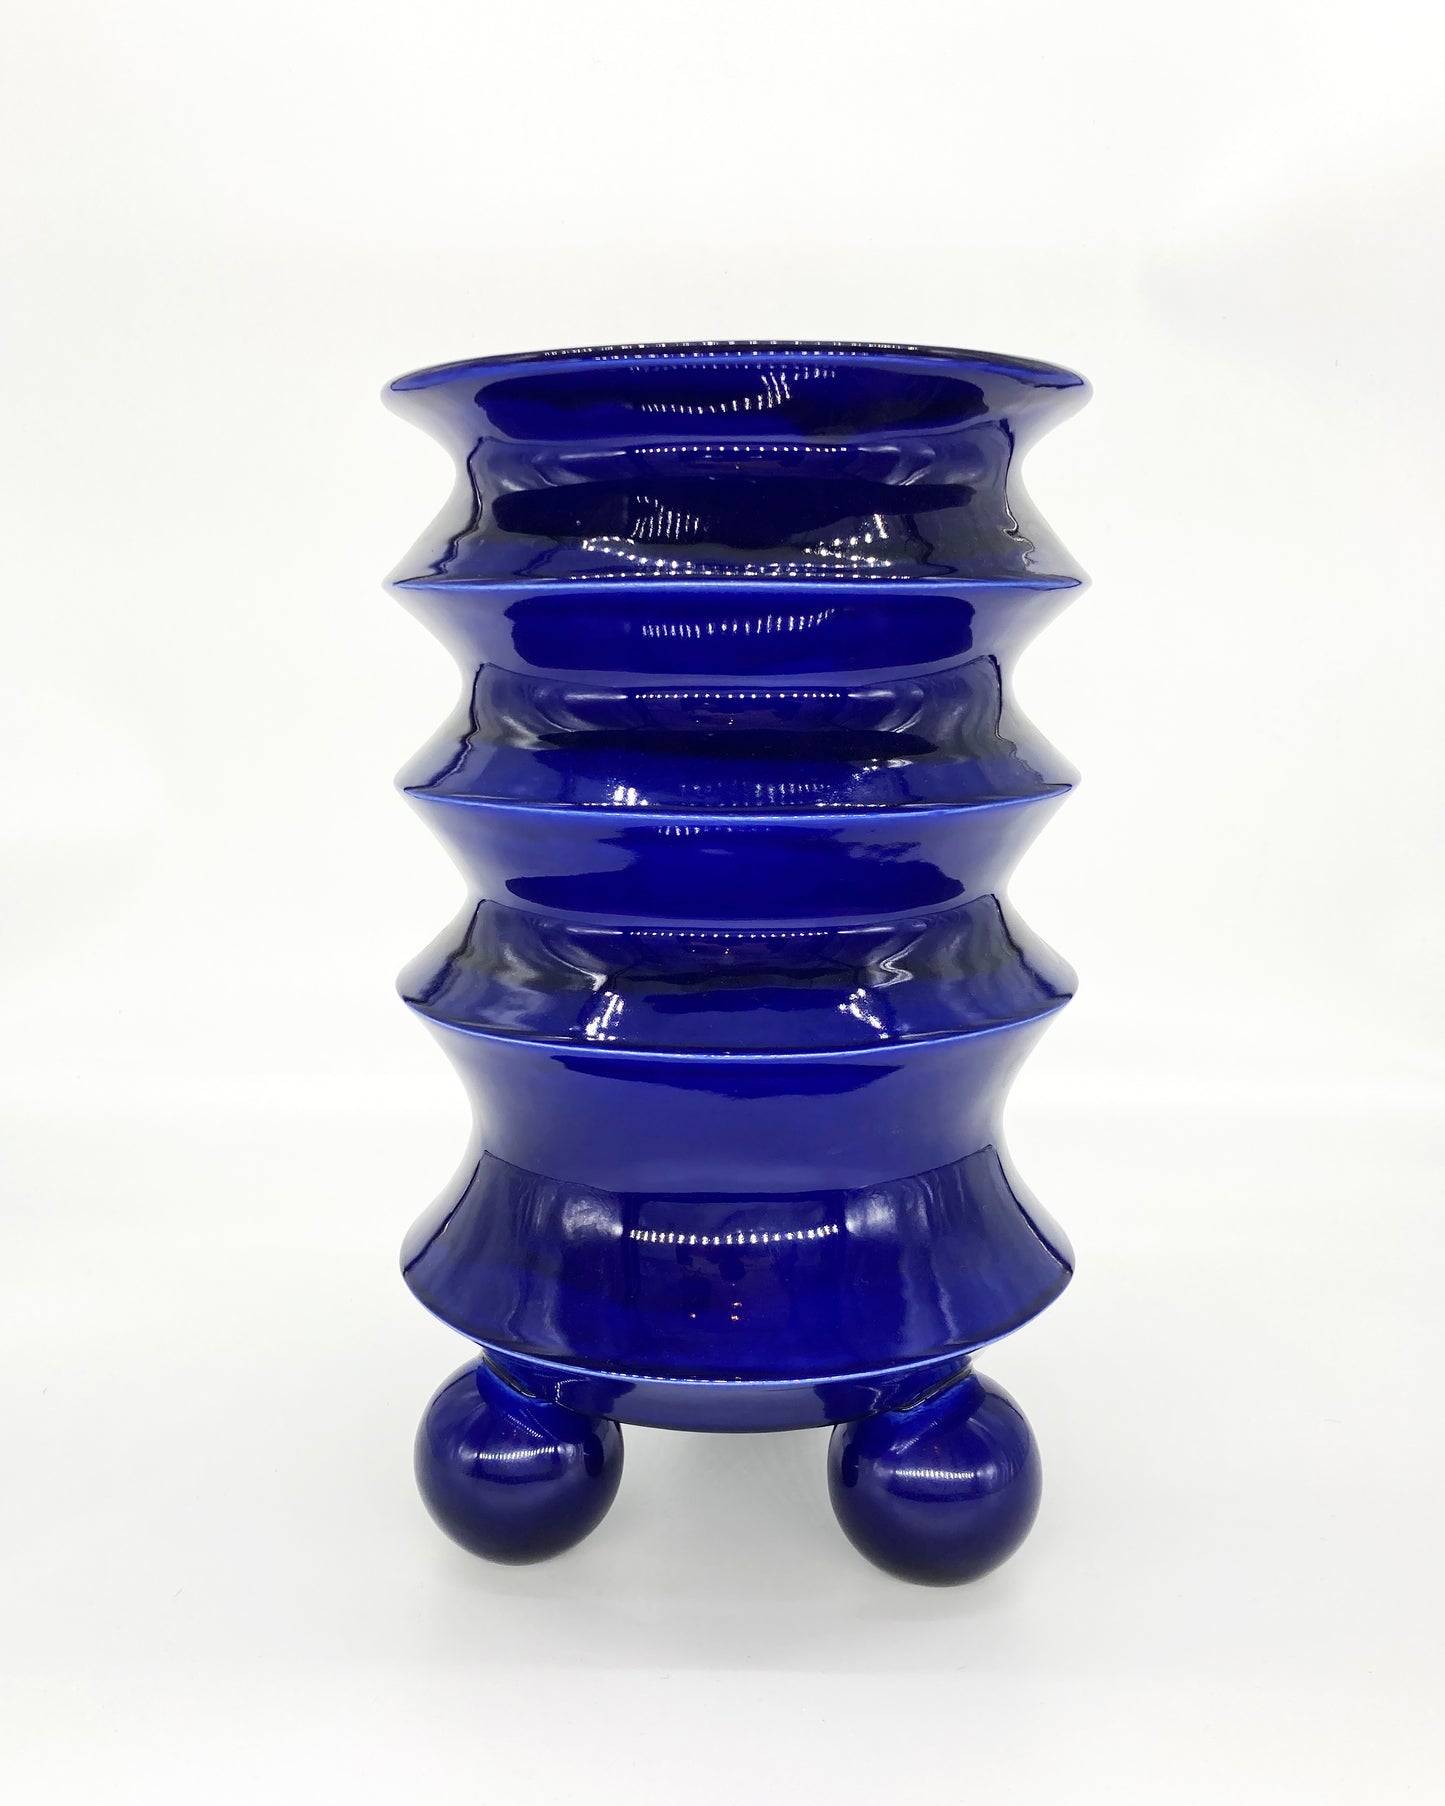 SALE First Edition Toltec Pop Art Ceramic Vase Blue